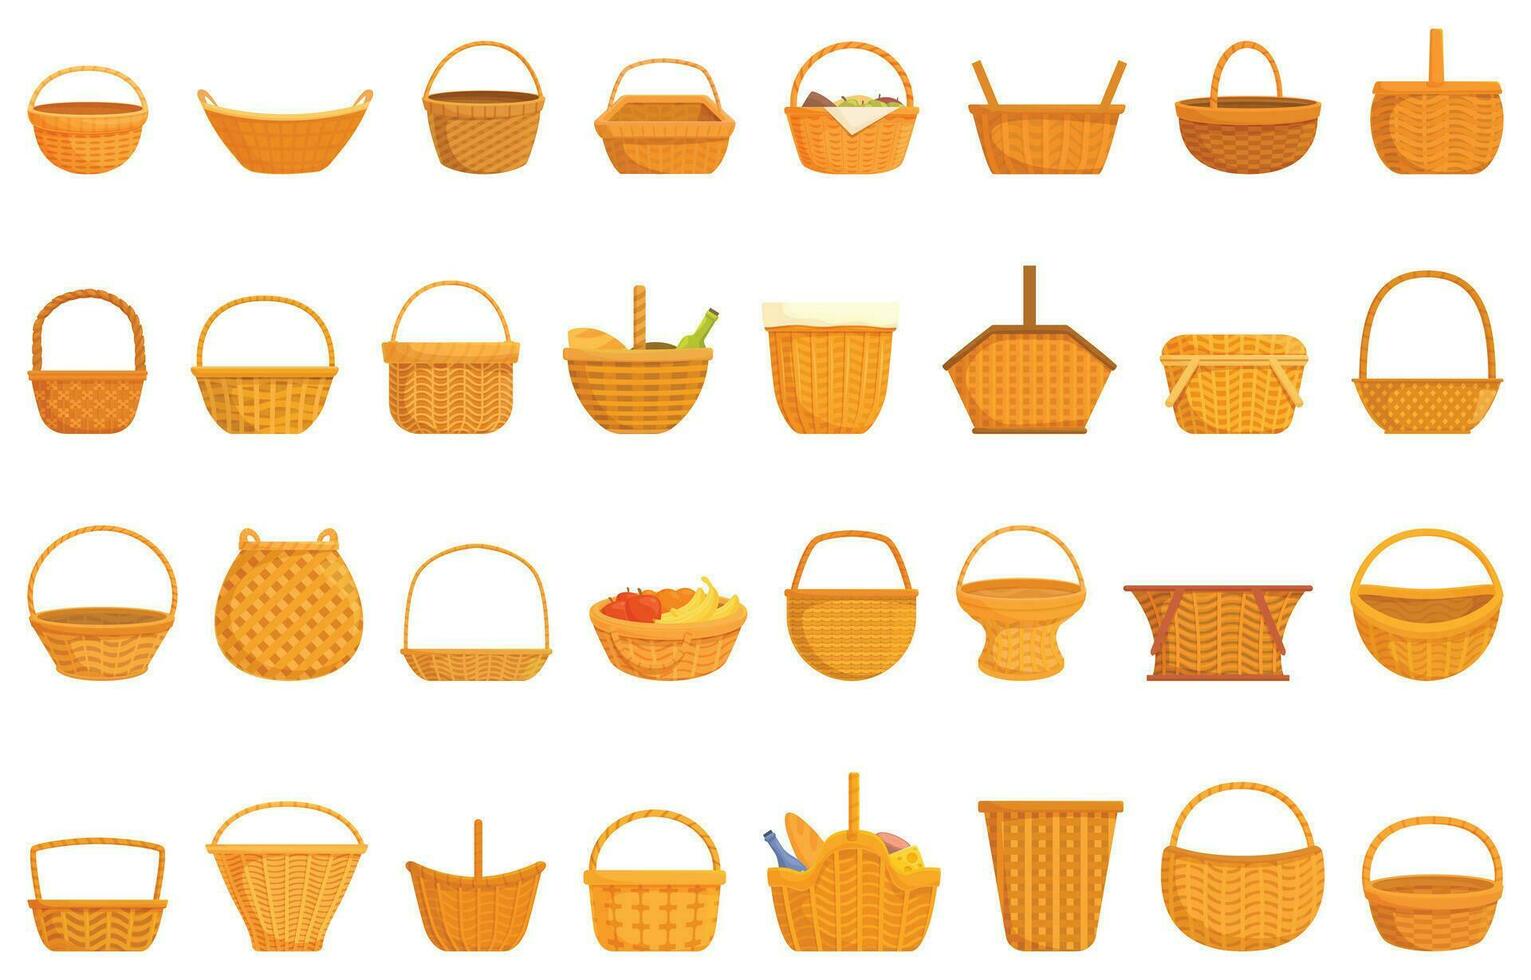 korg- korg ikoner uppsättning tecknad serie vektor. picknick mellanmål korg- vektor